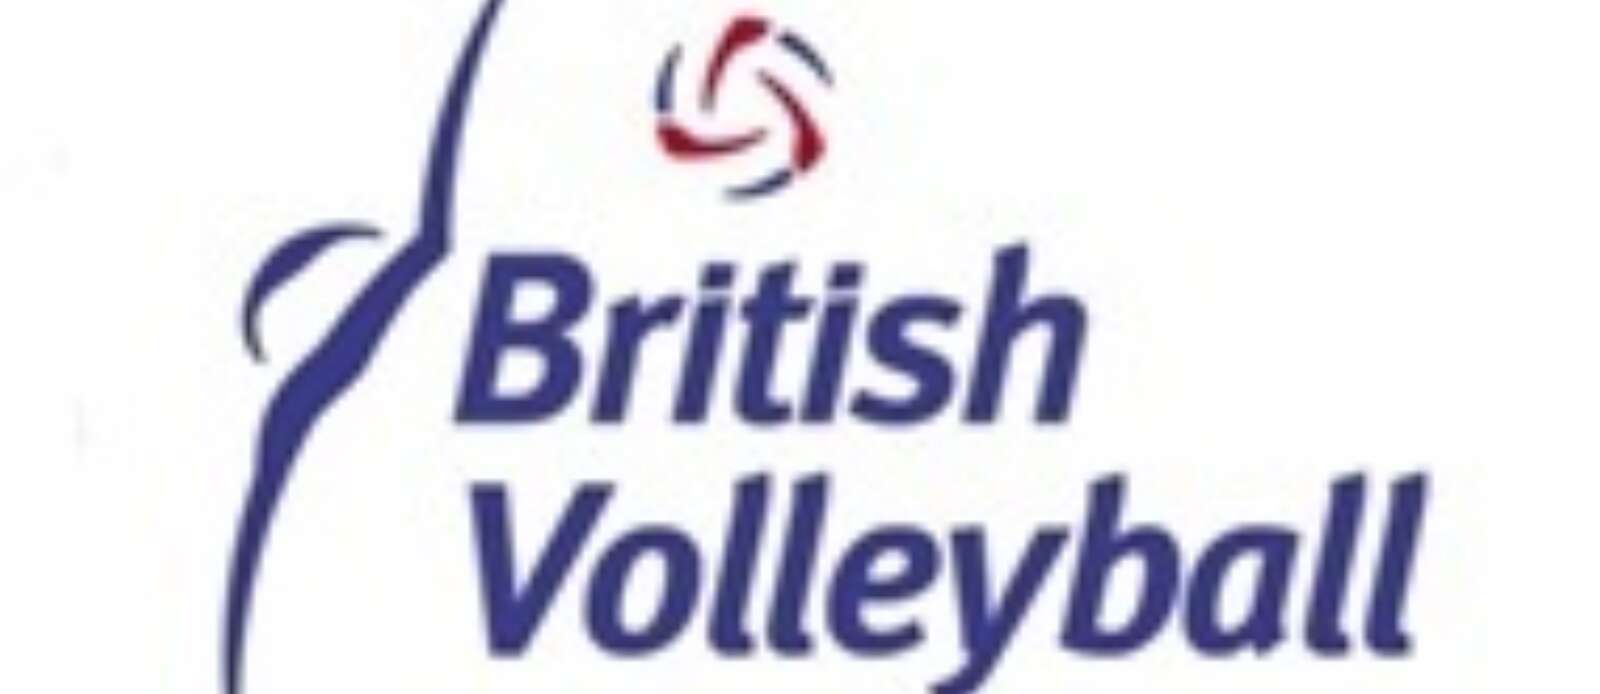 Great Britain Senior Men's Assistant Coach - Sitting Volleyball Header Image.